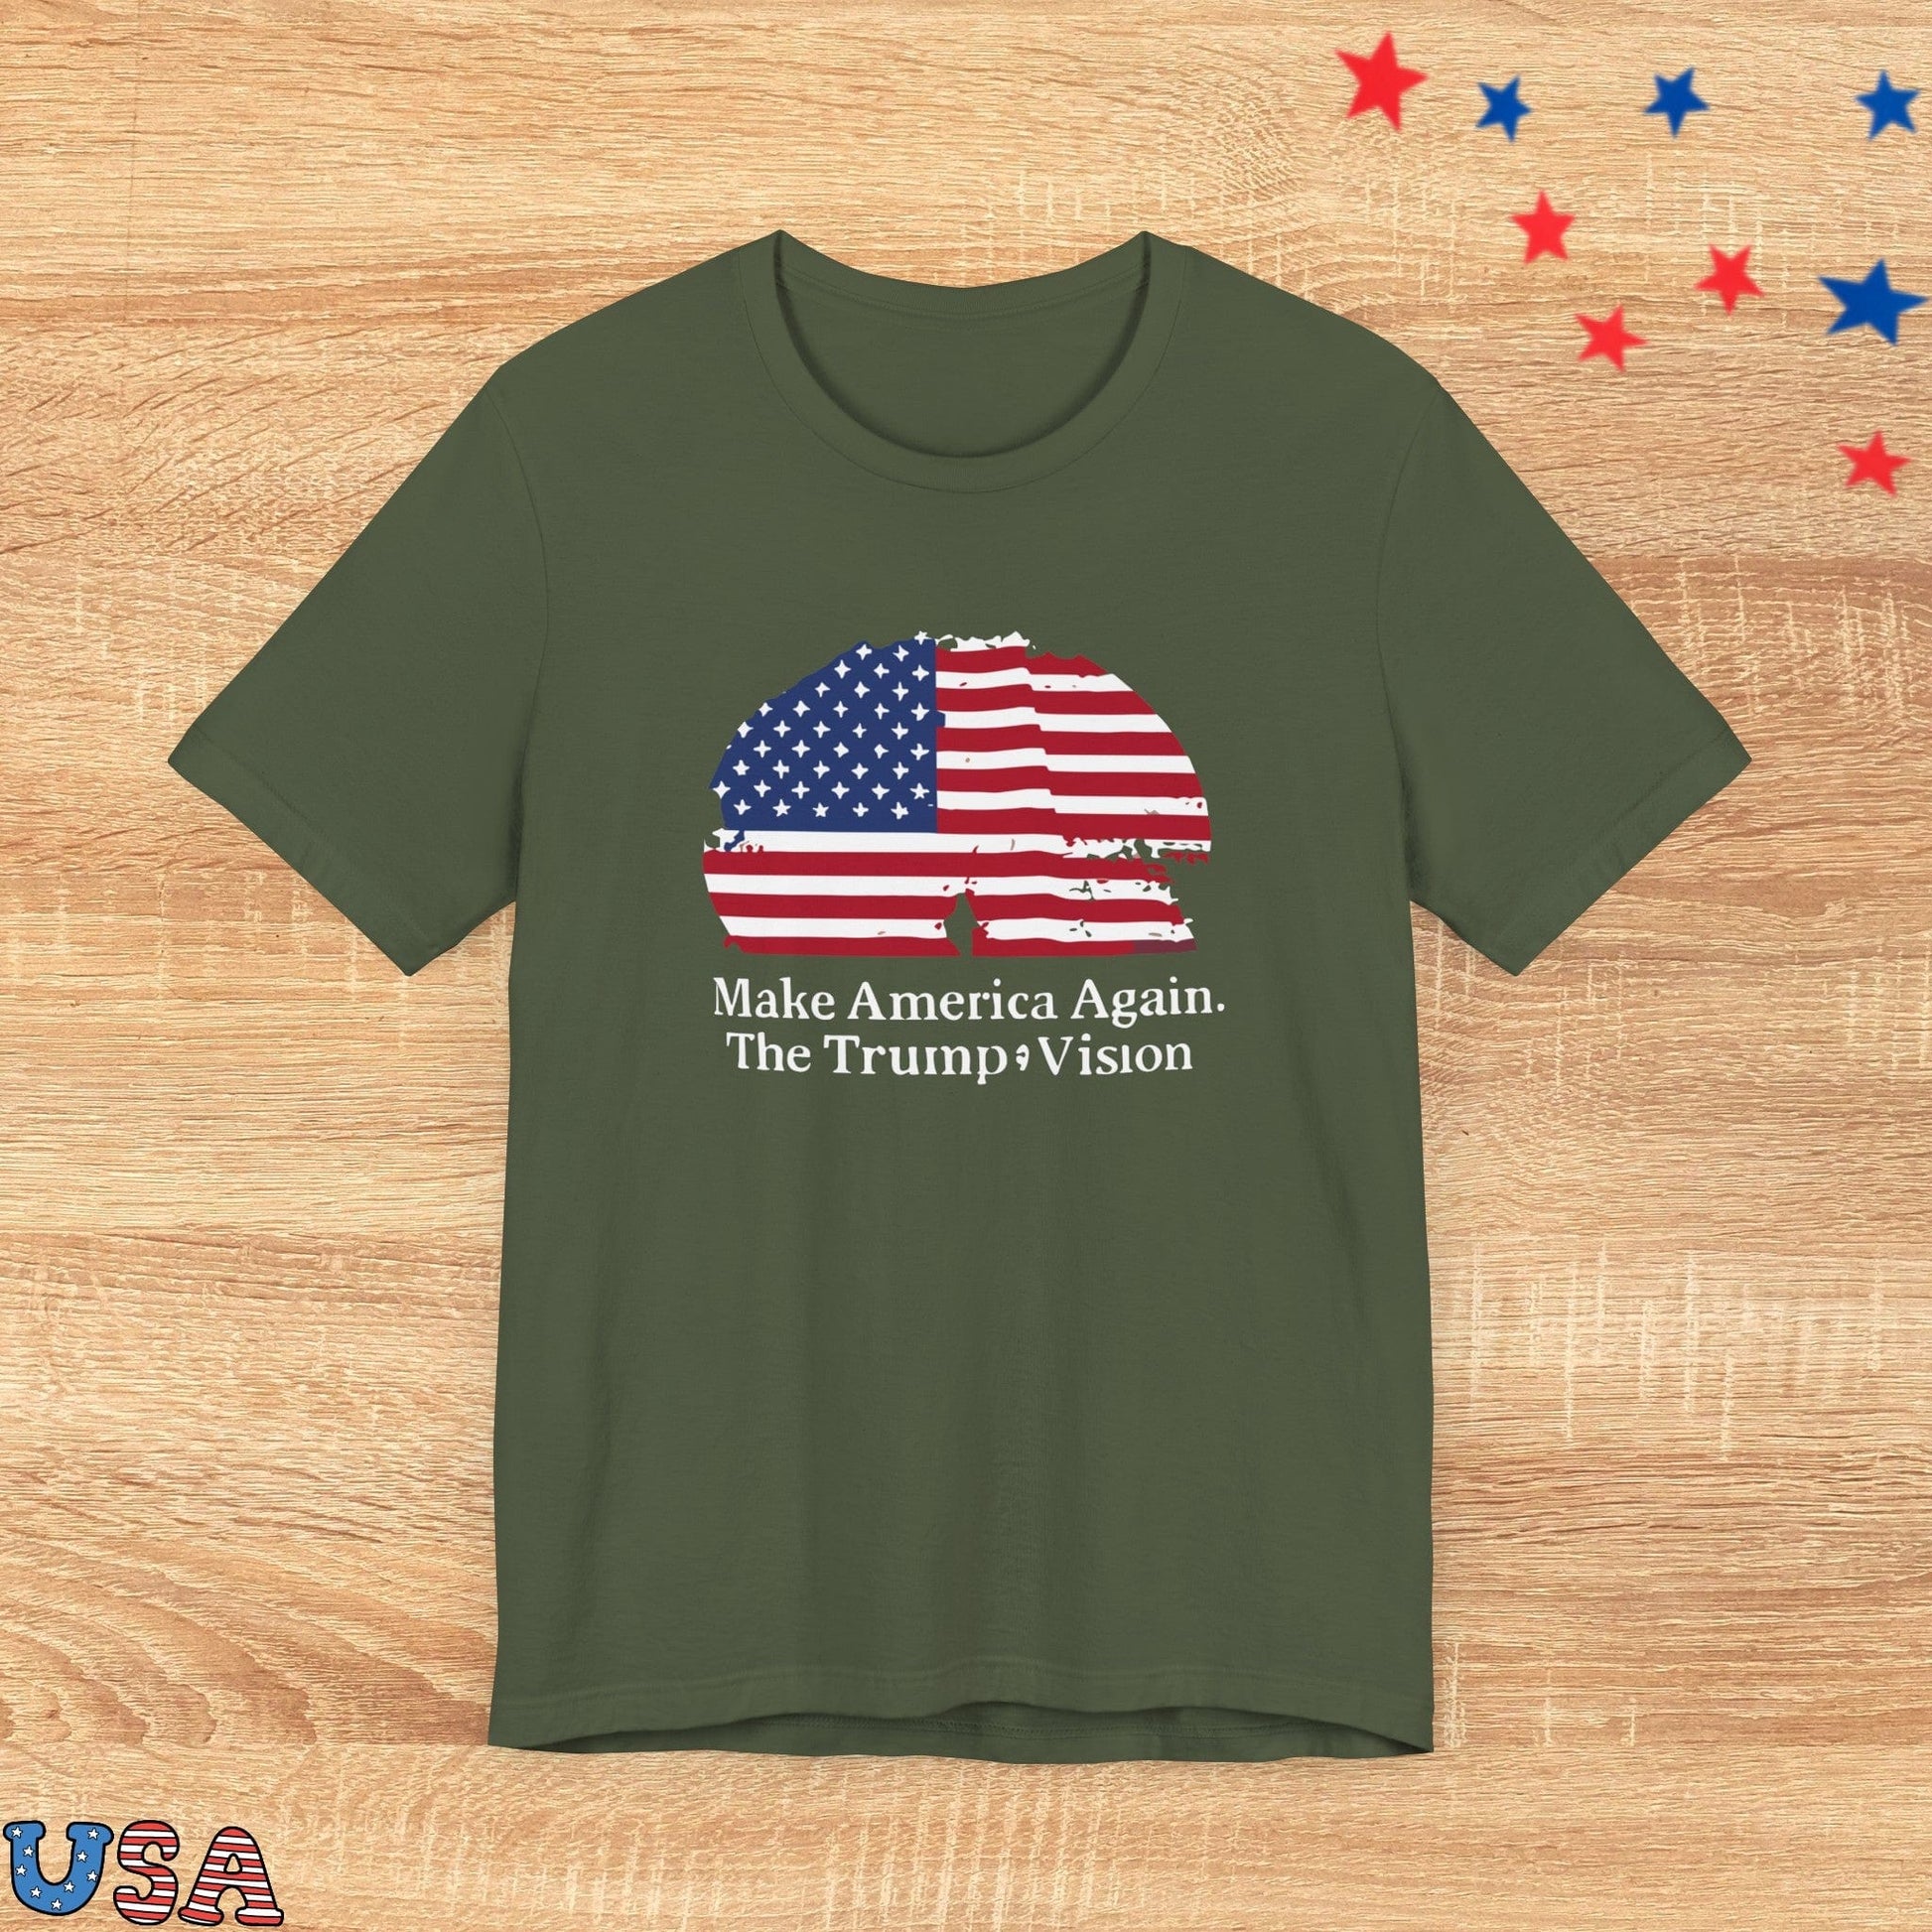 patriotic stars T-Shirt Military Green / XS Make America Again! The Trump Vision